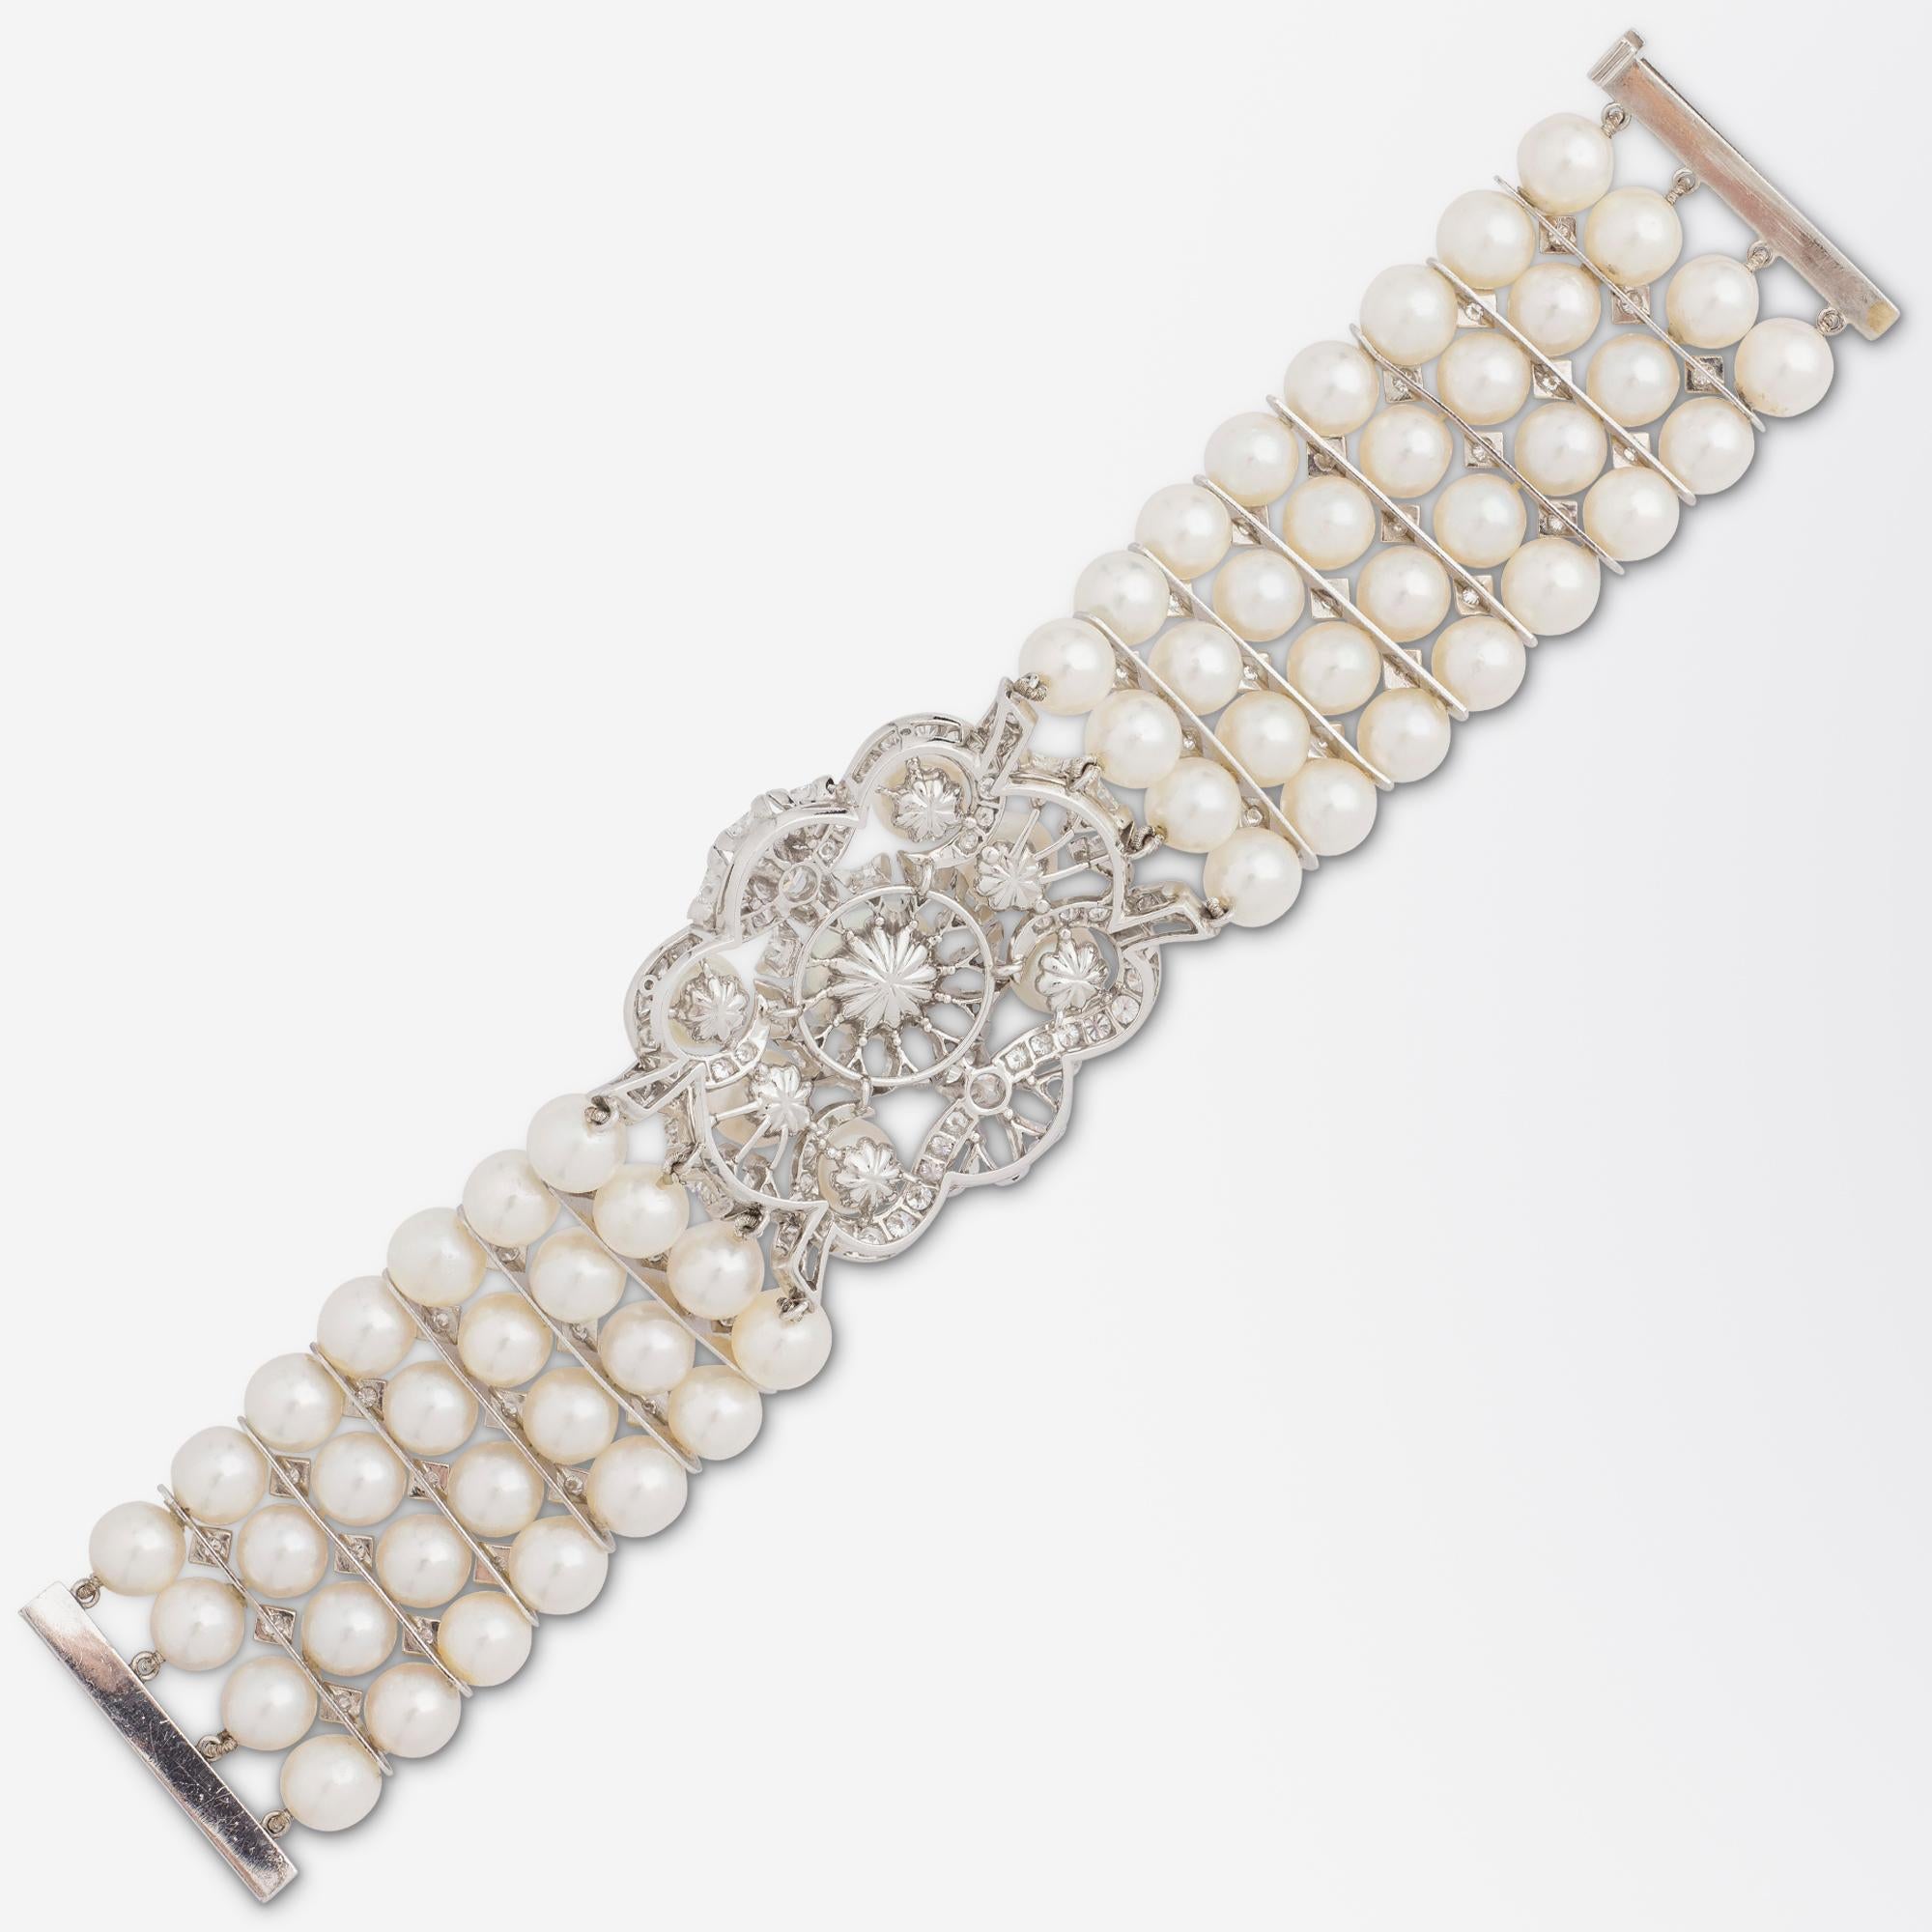 Impressive Diamond & Pearl Bracelet Set in Platinum Retailed by David R. Balogh For Sale 2